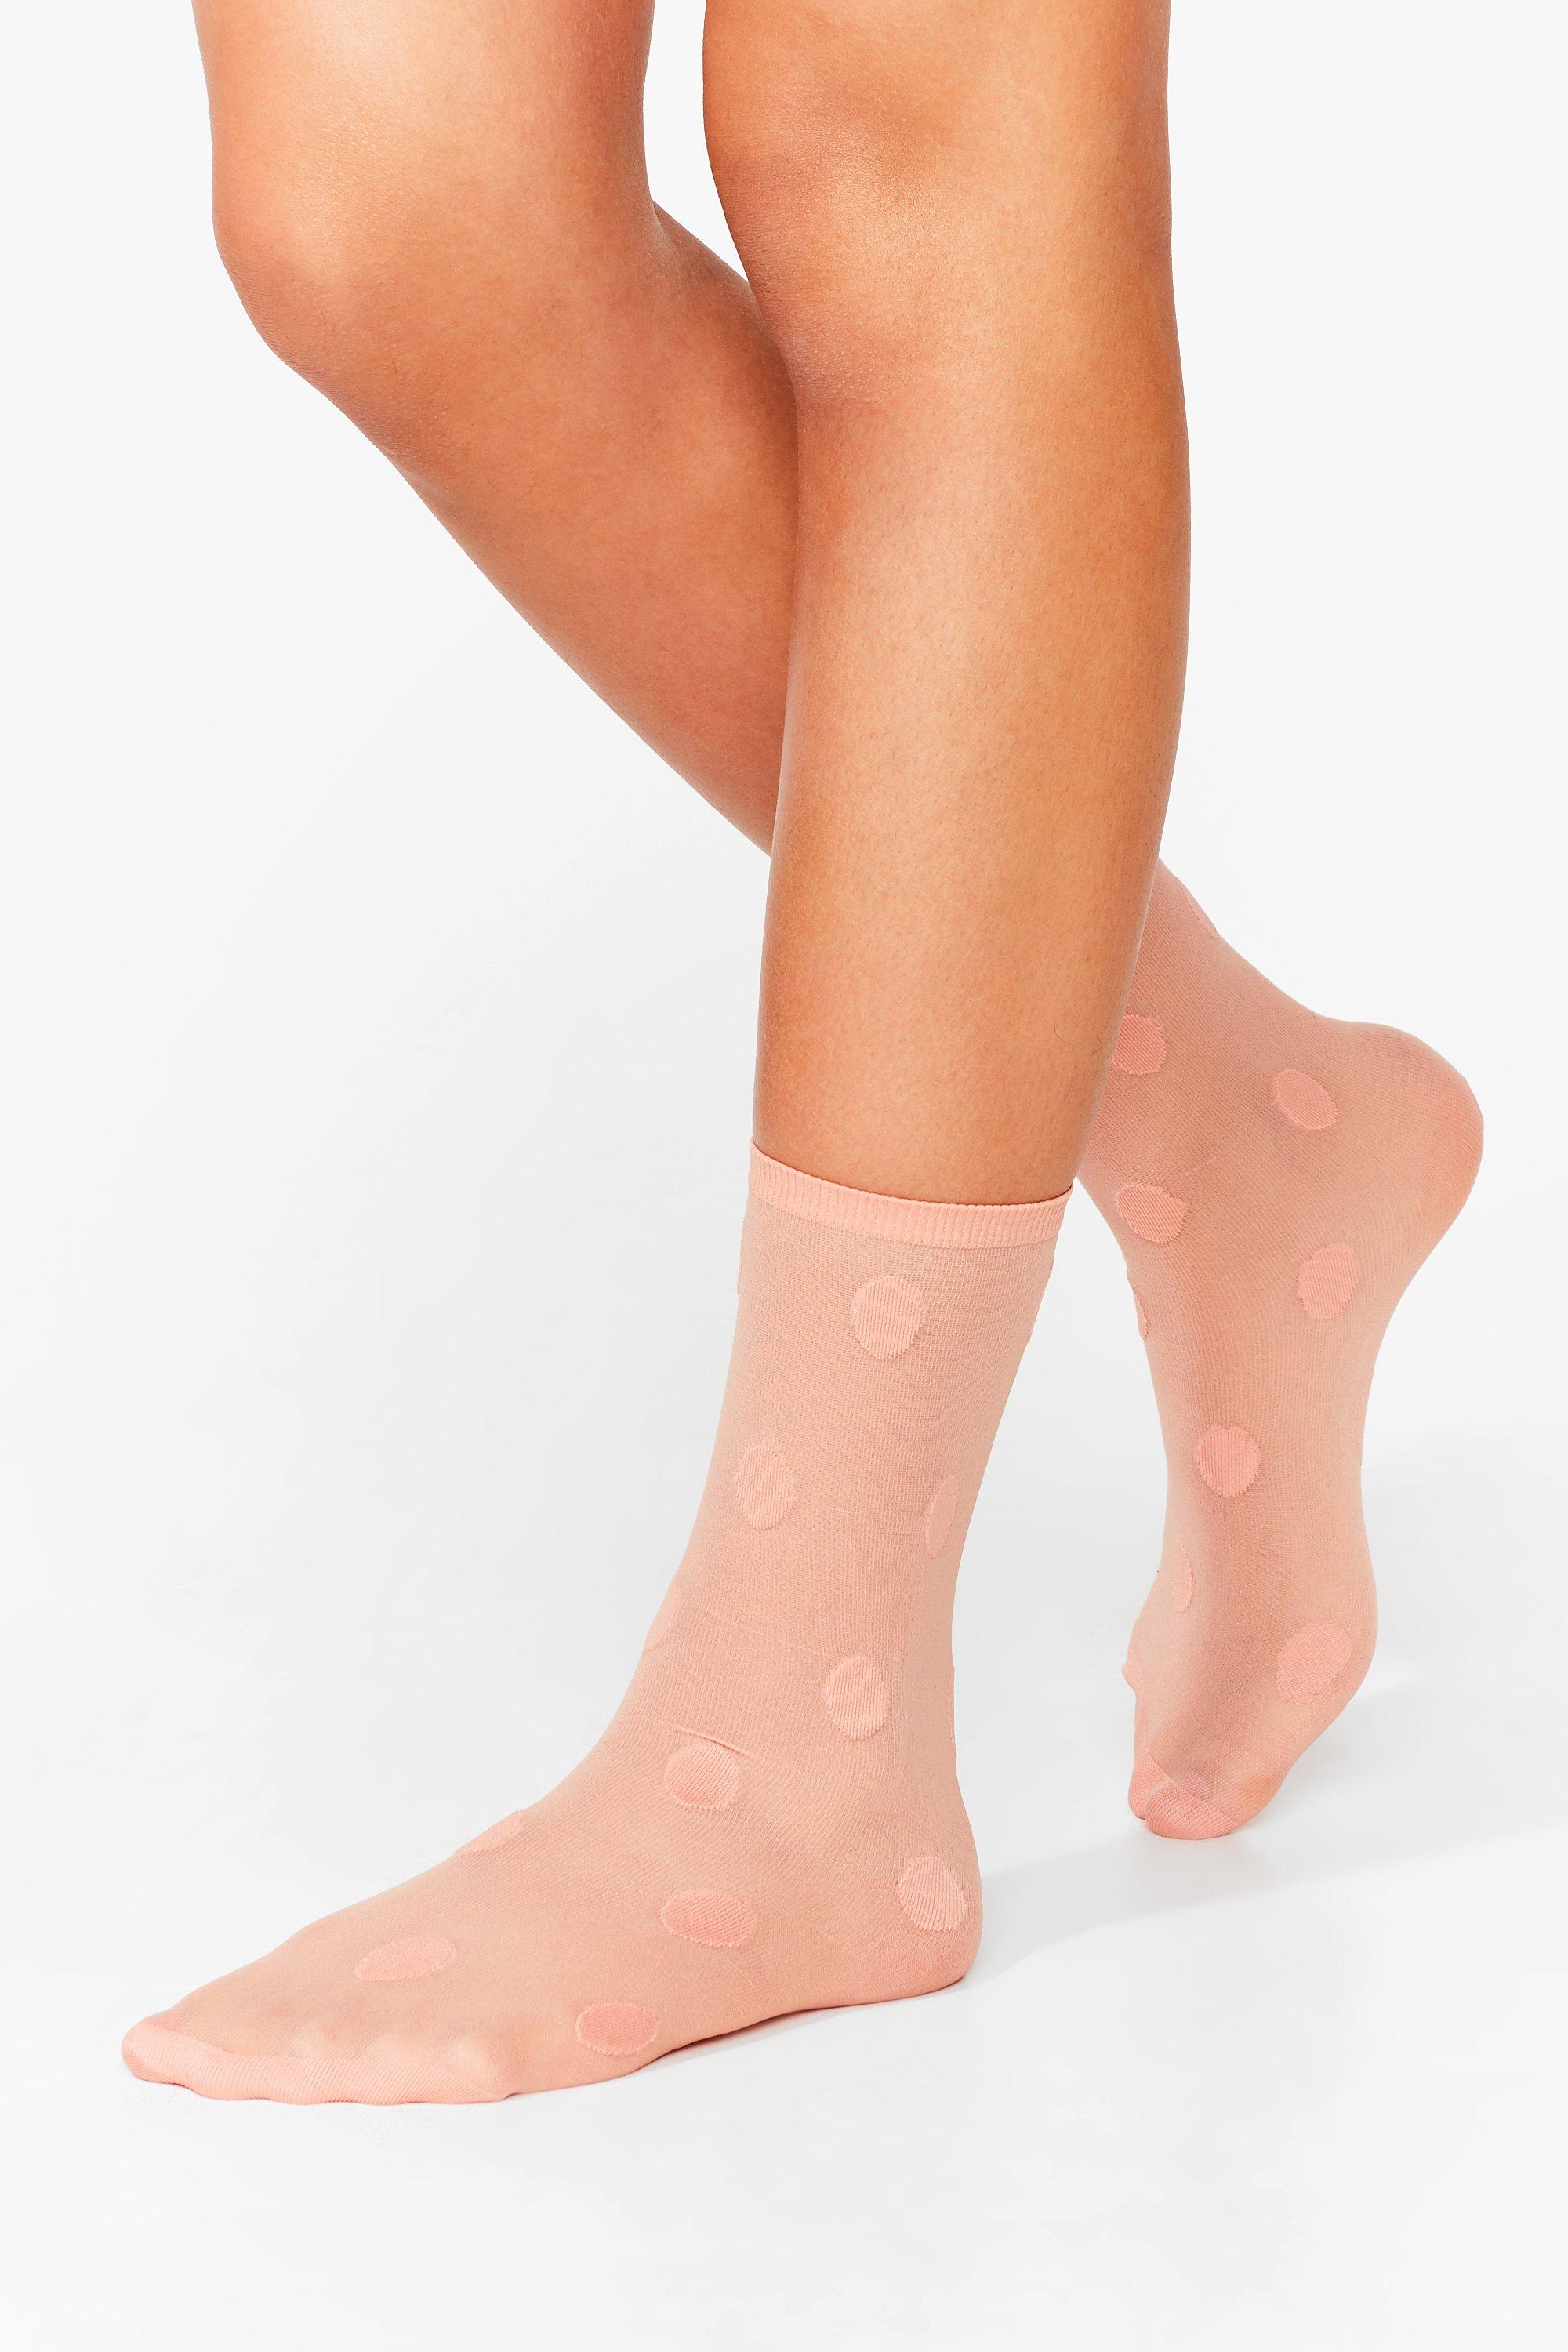 Nude pink socks nasty